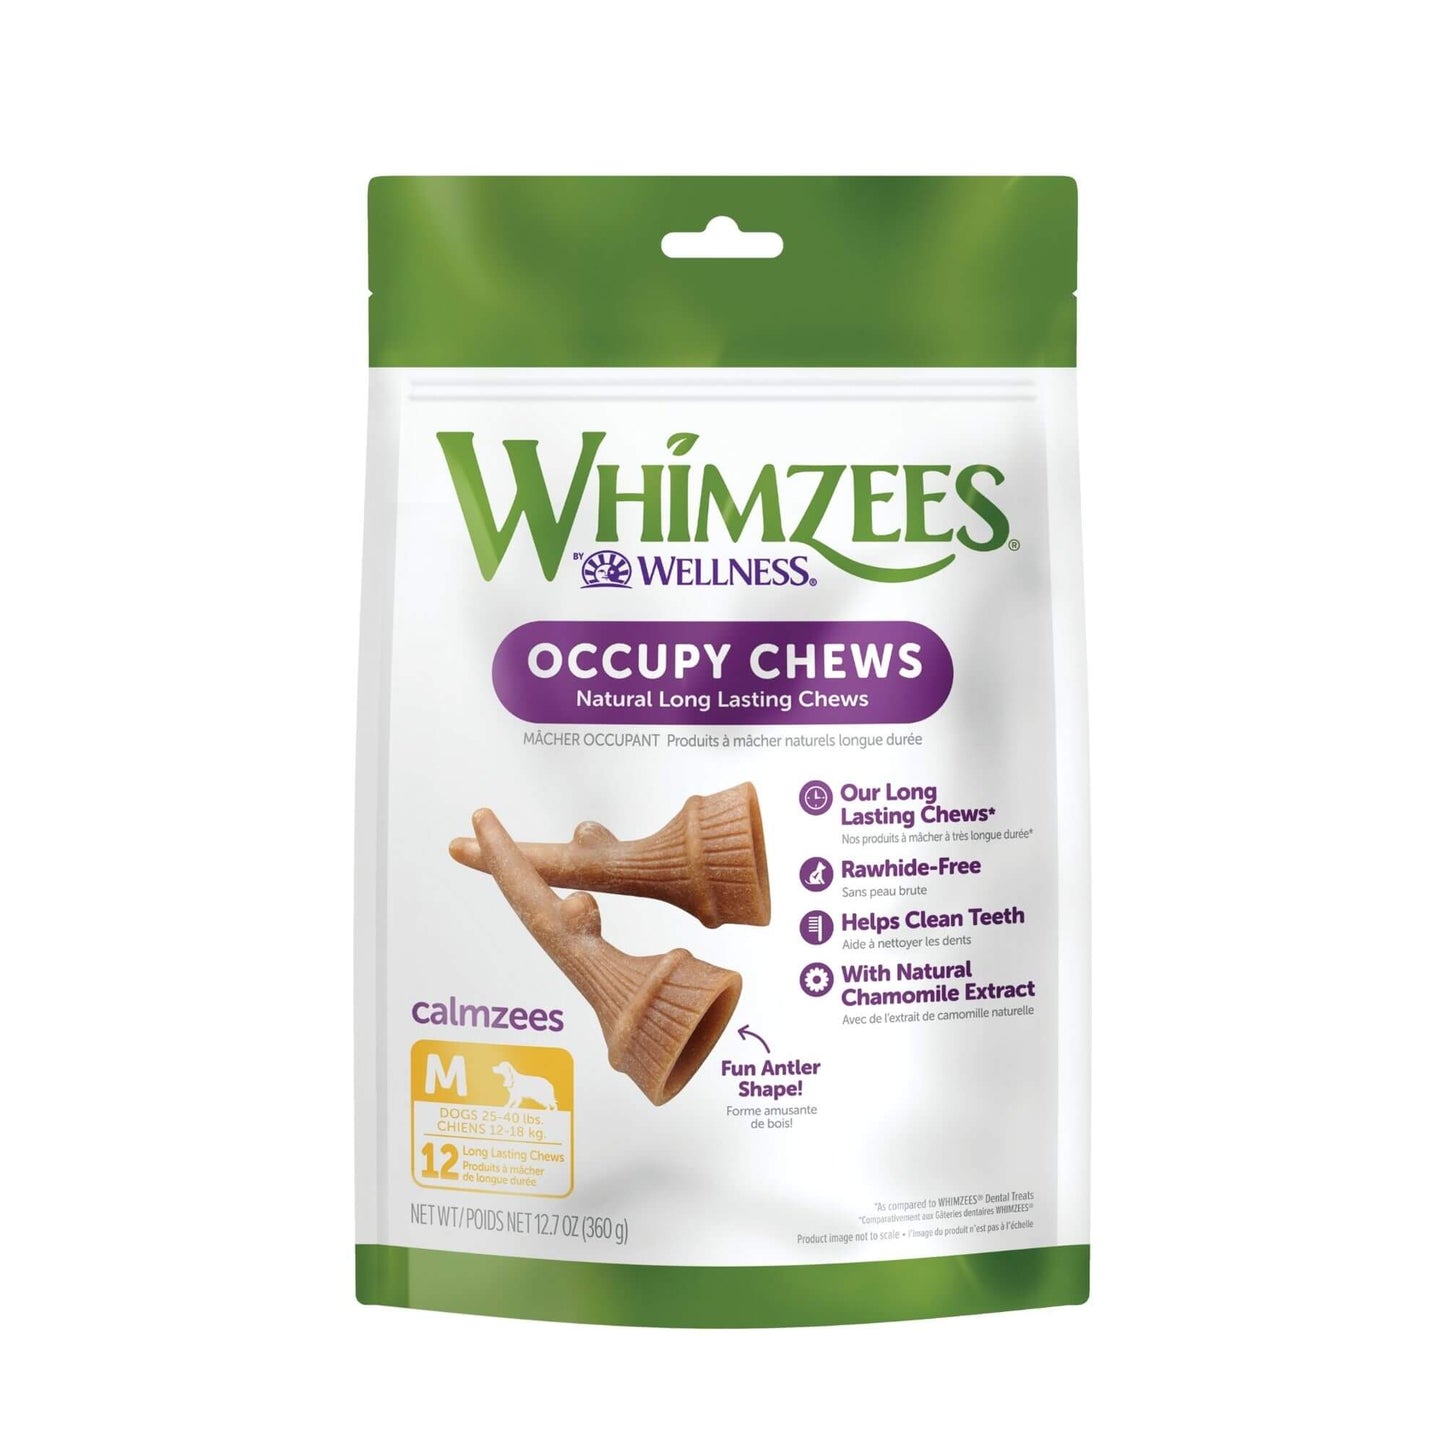 Whimzees Occupy Calmzees Chews Antlers Value Bag Medium 12pk